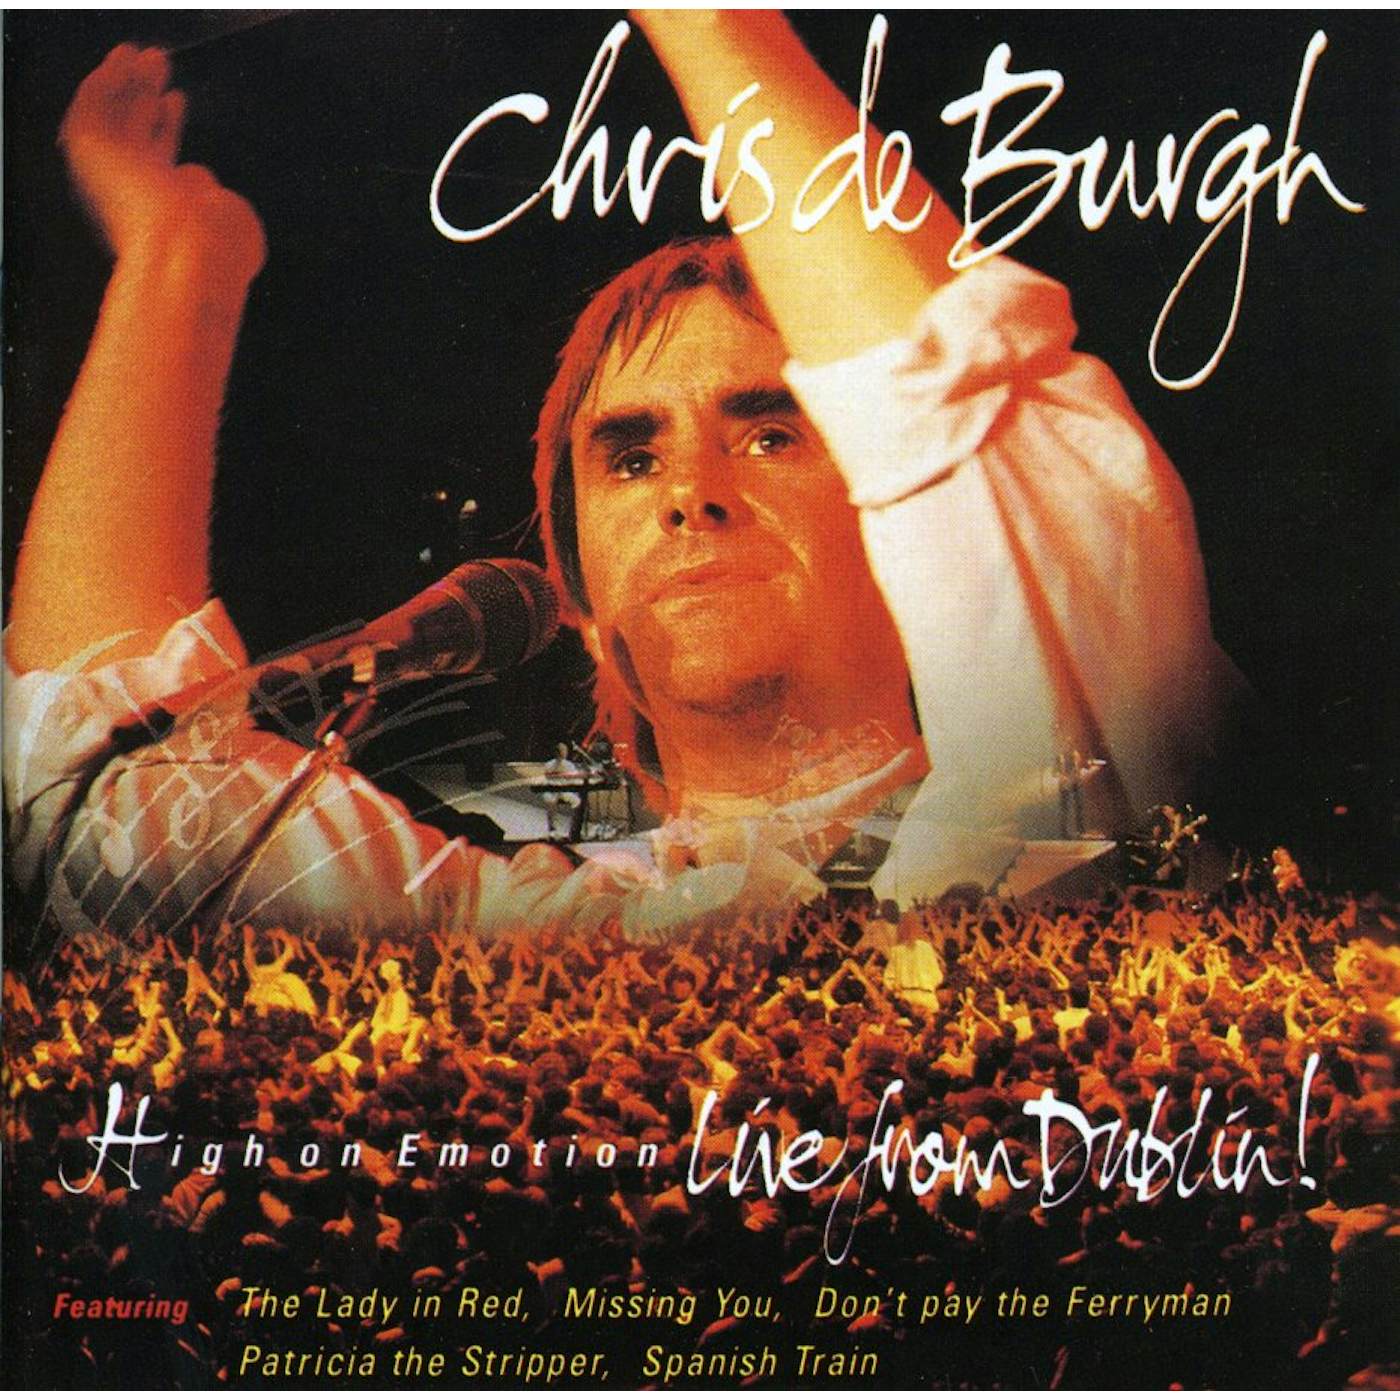 Chris de Burgh HIGH ON EMOTION - LIVE FROM DUBLIN CD